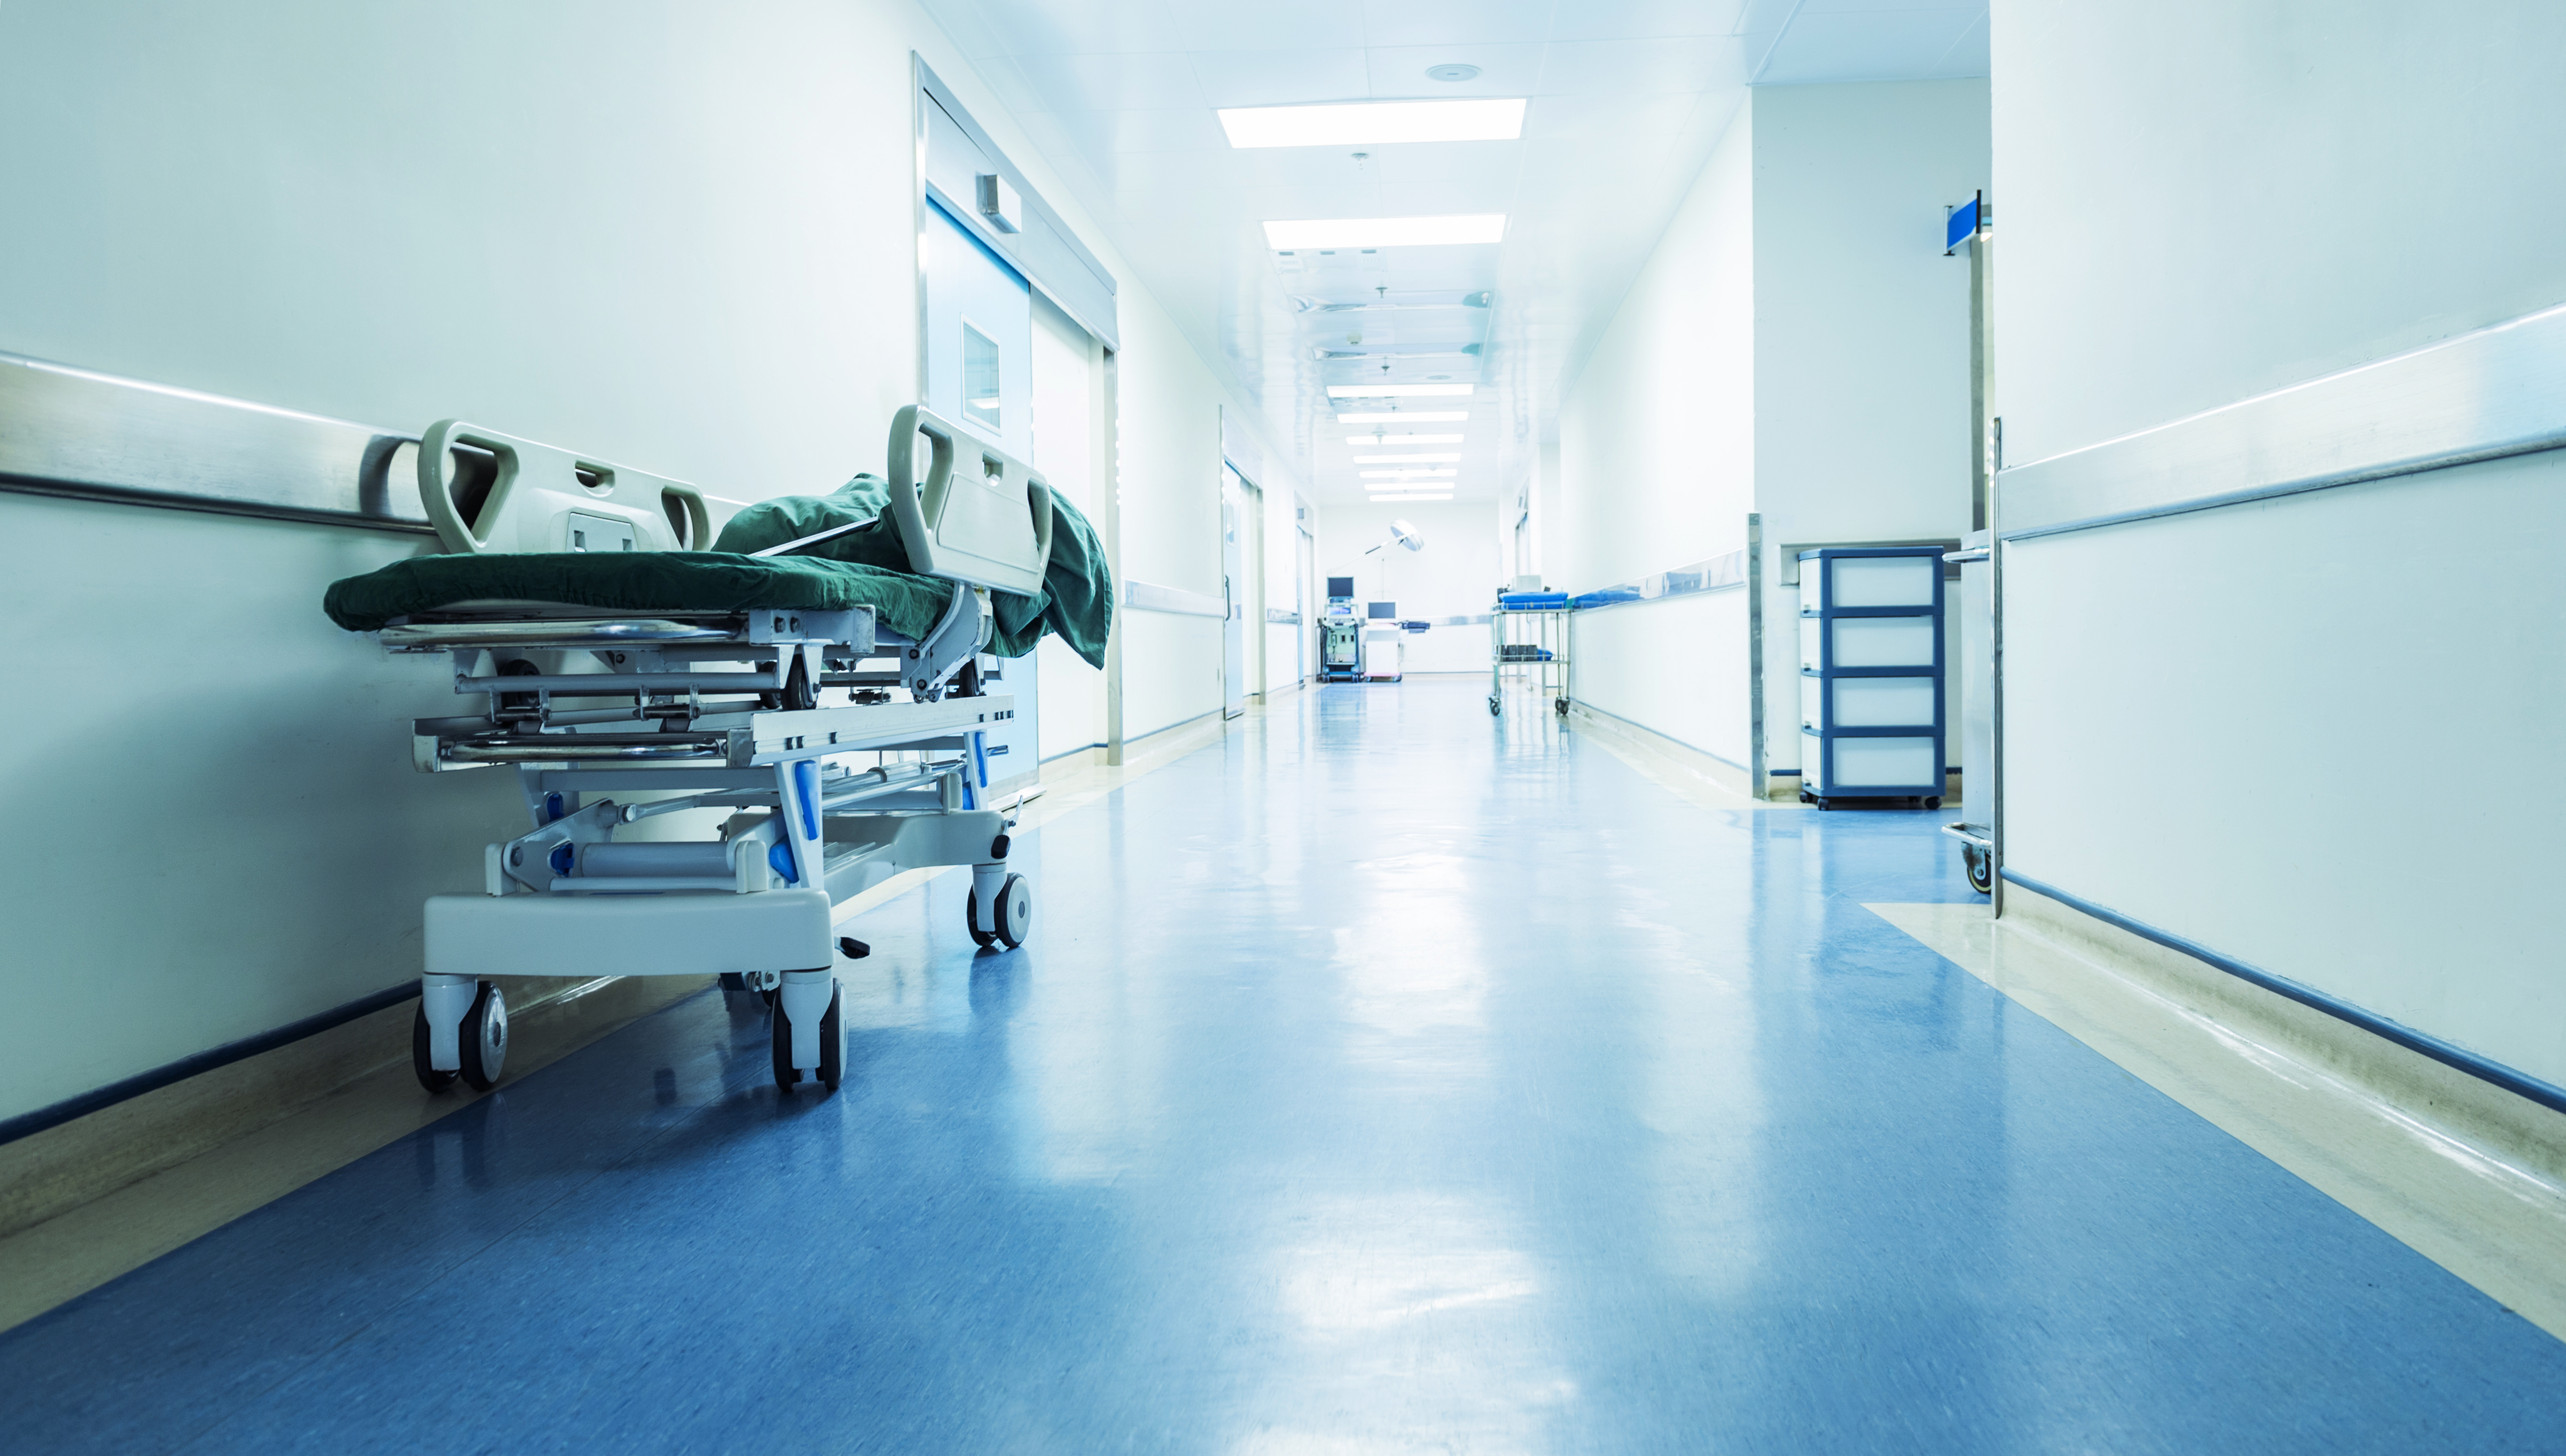 Empty hospital hallway. | Source: Shutterstock